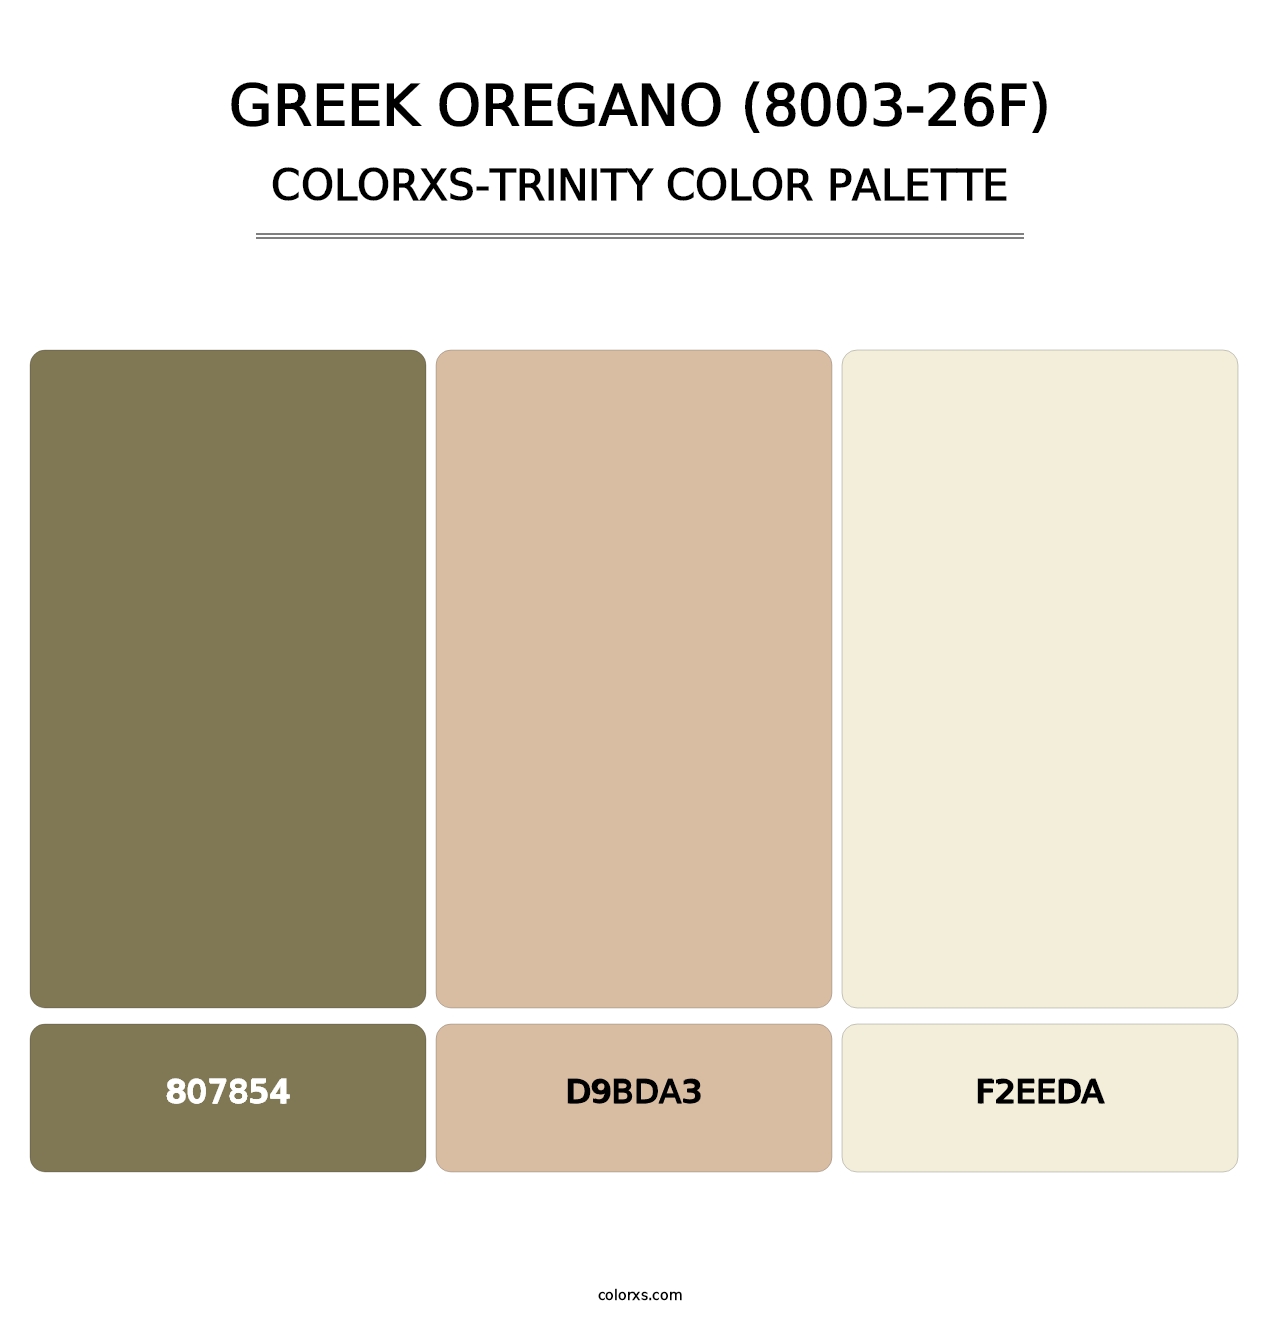 Greek Oregano (8003-26F) - Colorxs Trinity Palette